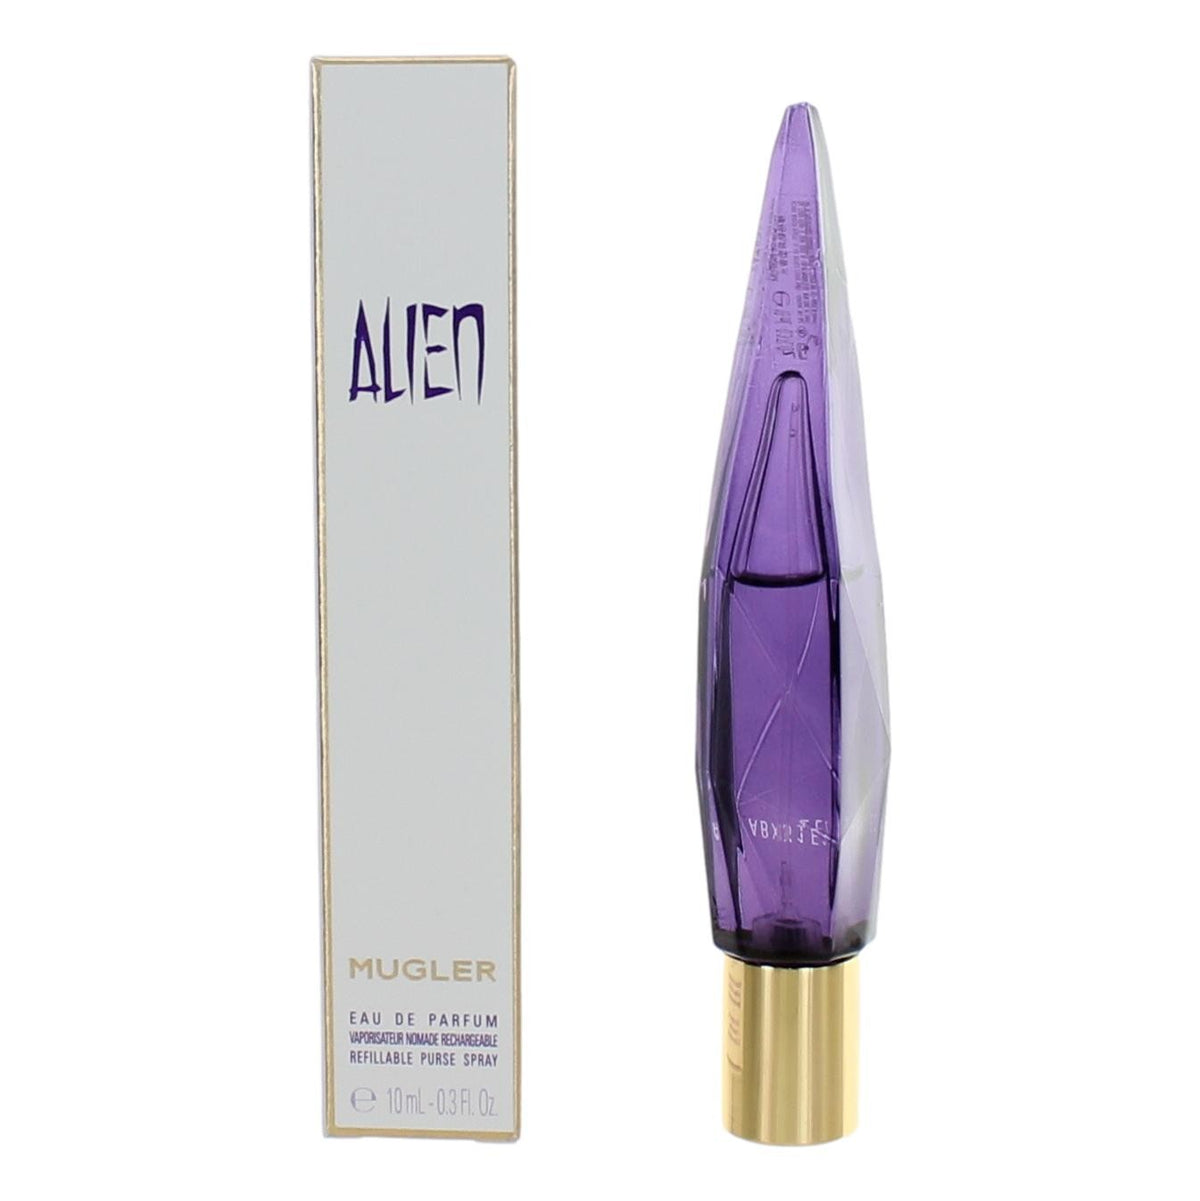 Alien by Thierry Mugler, .3 oz Eau de Parfum Refillable purse spray for Women.